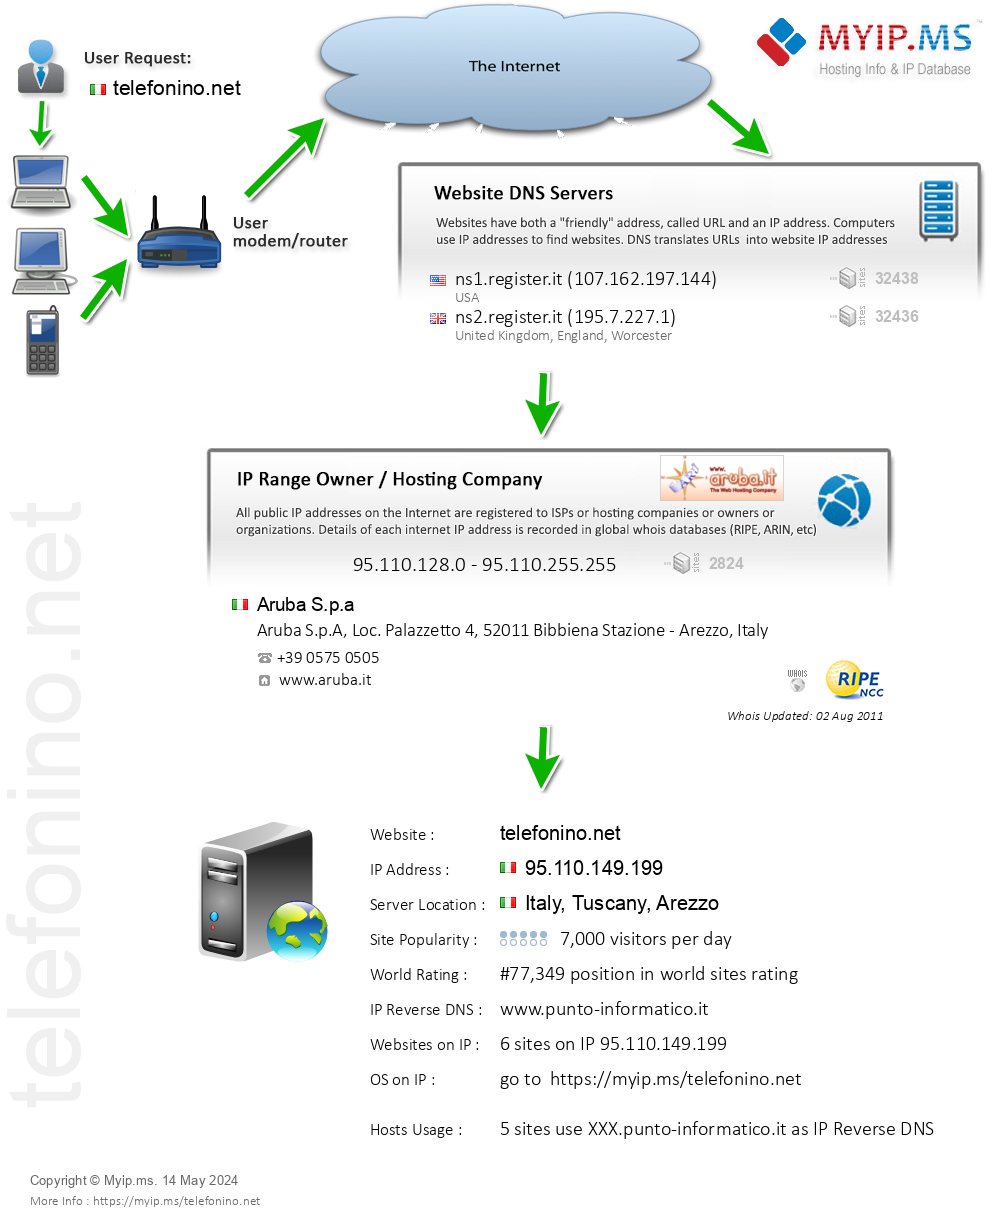 Telefonino.net - Website Hosting Visual IP Diagram